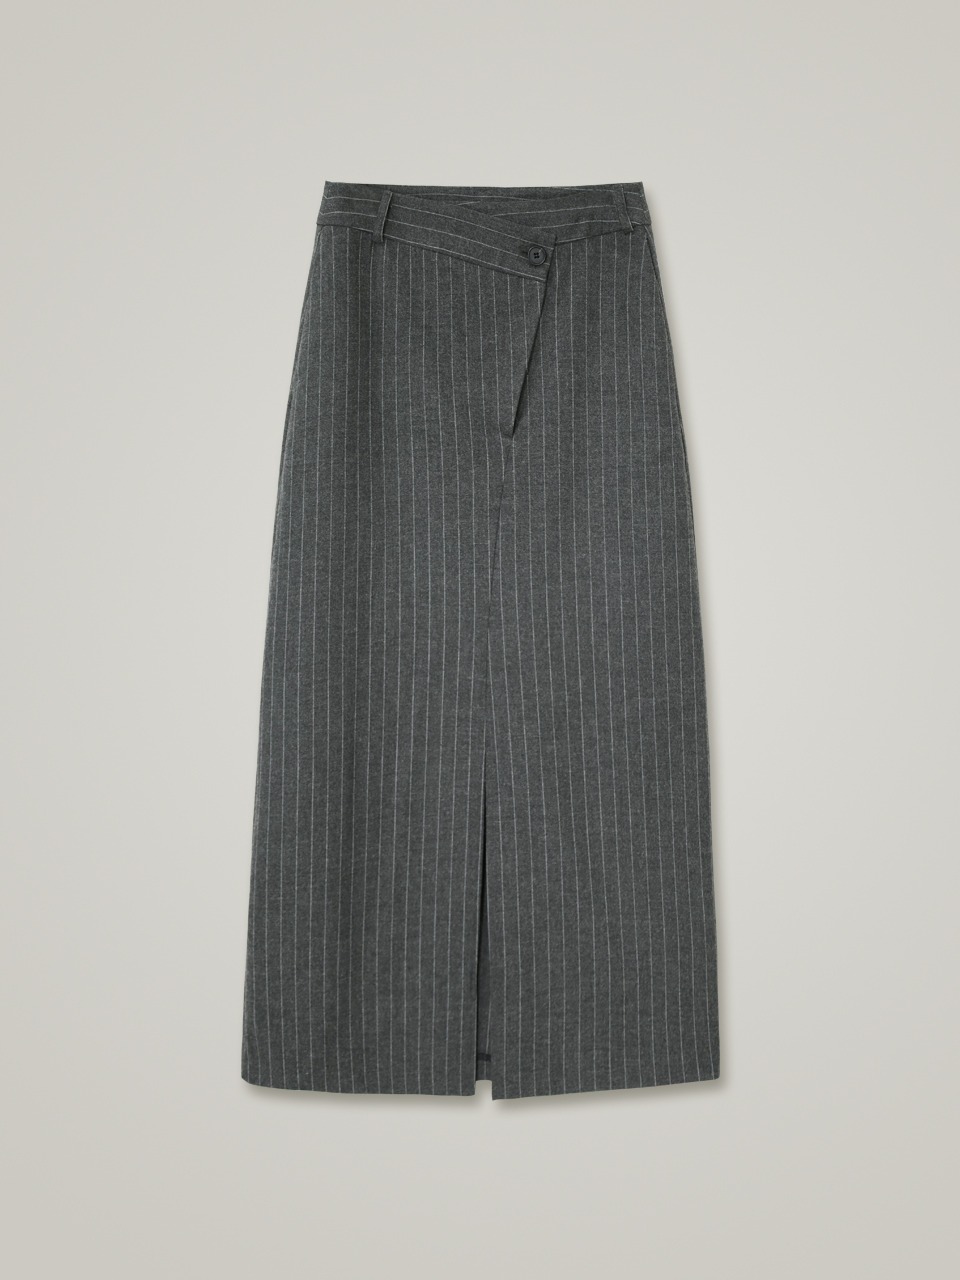 comos 963 diagonal striped wool skirt (charcoal)